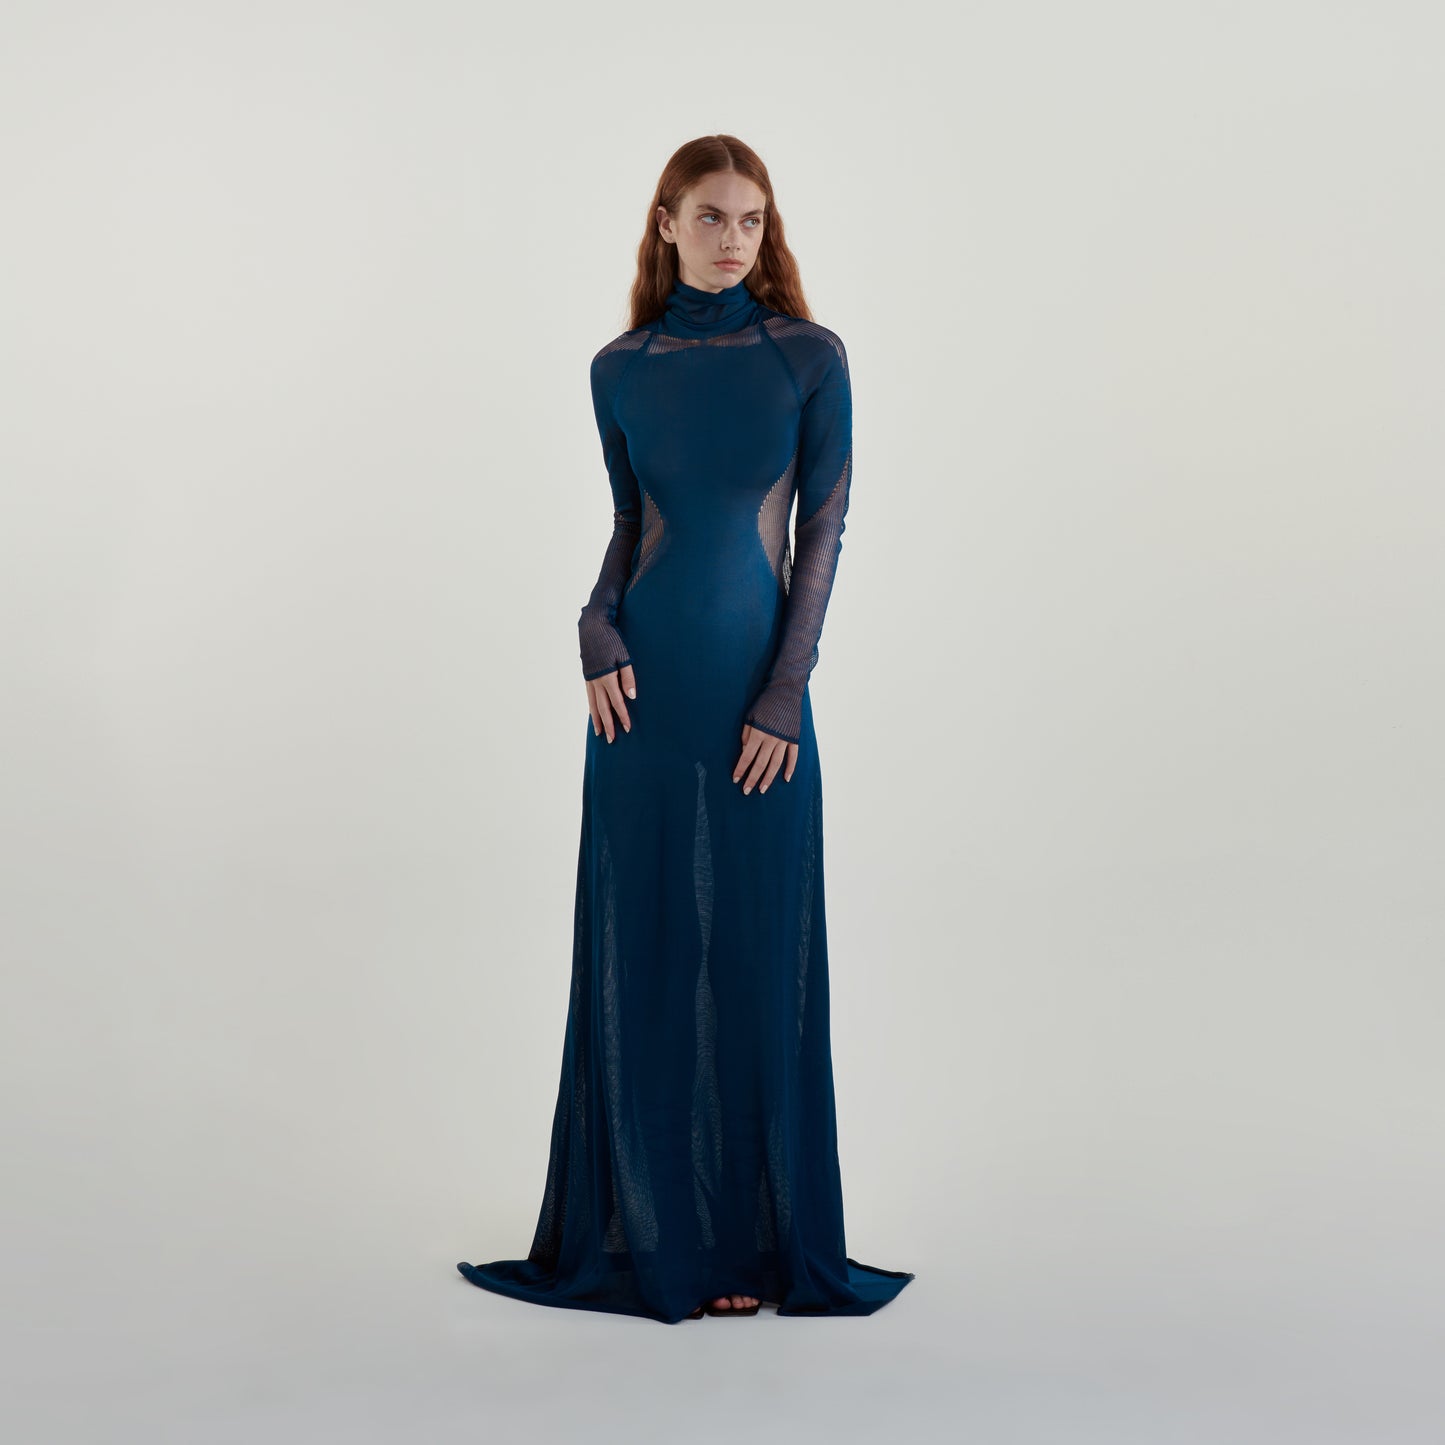 Mystic Empress Dress in cobalt | Lara Chamandi